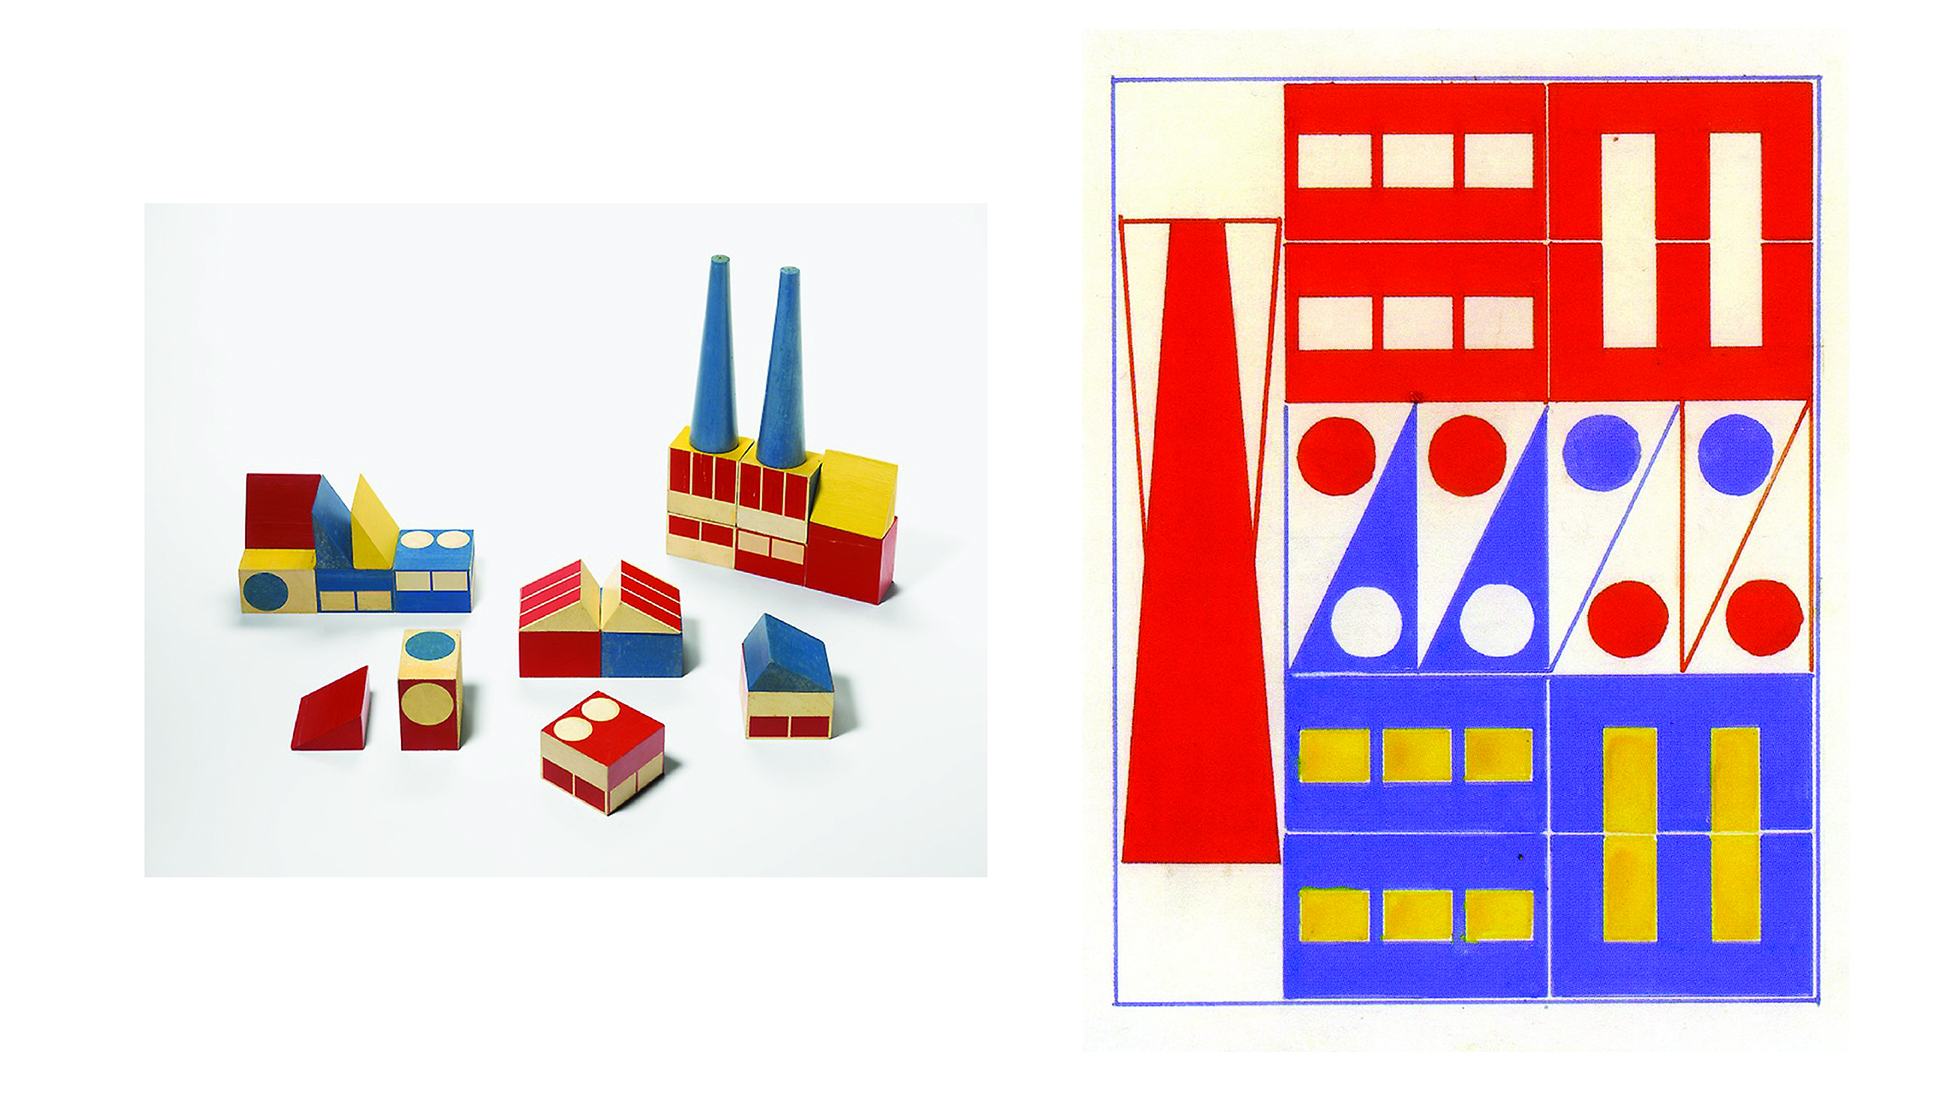 Ladislav Sutnar designed wooden toys and graphics